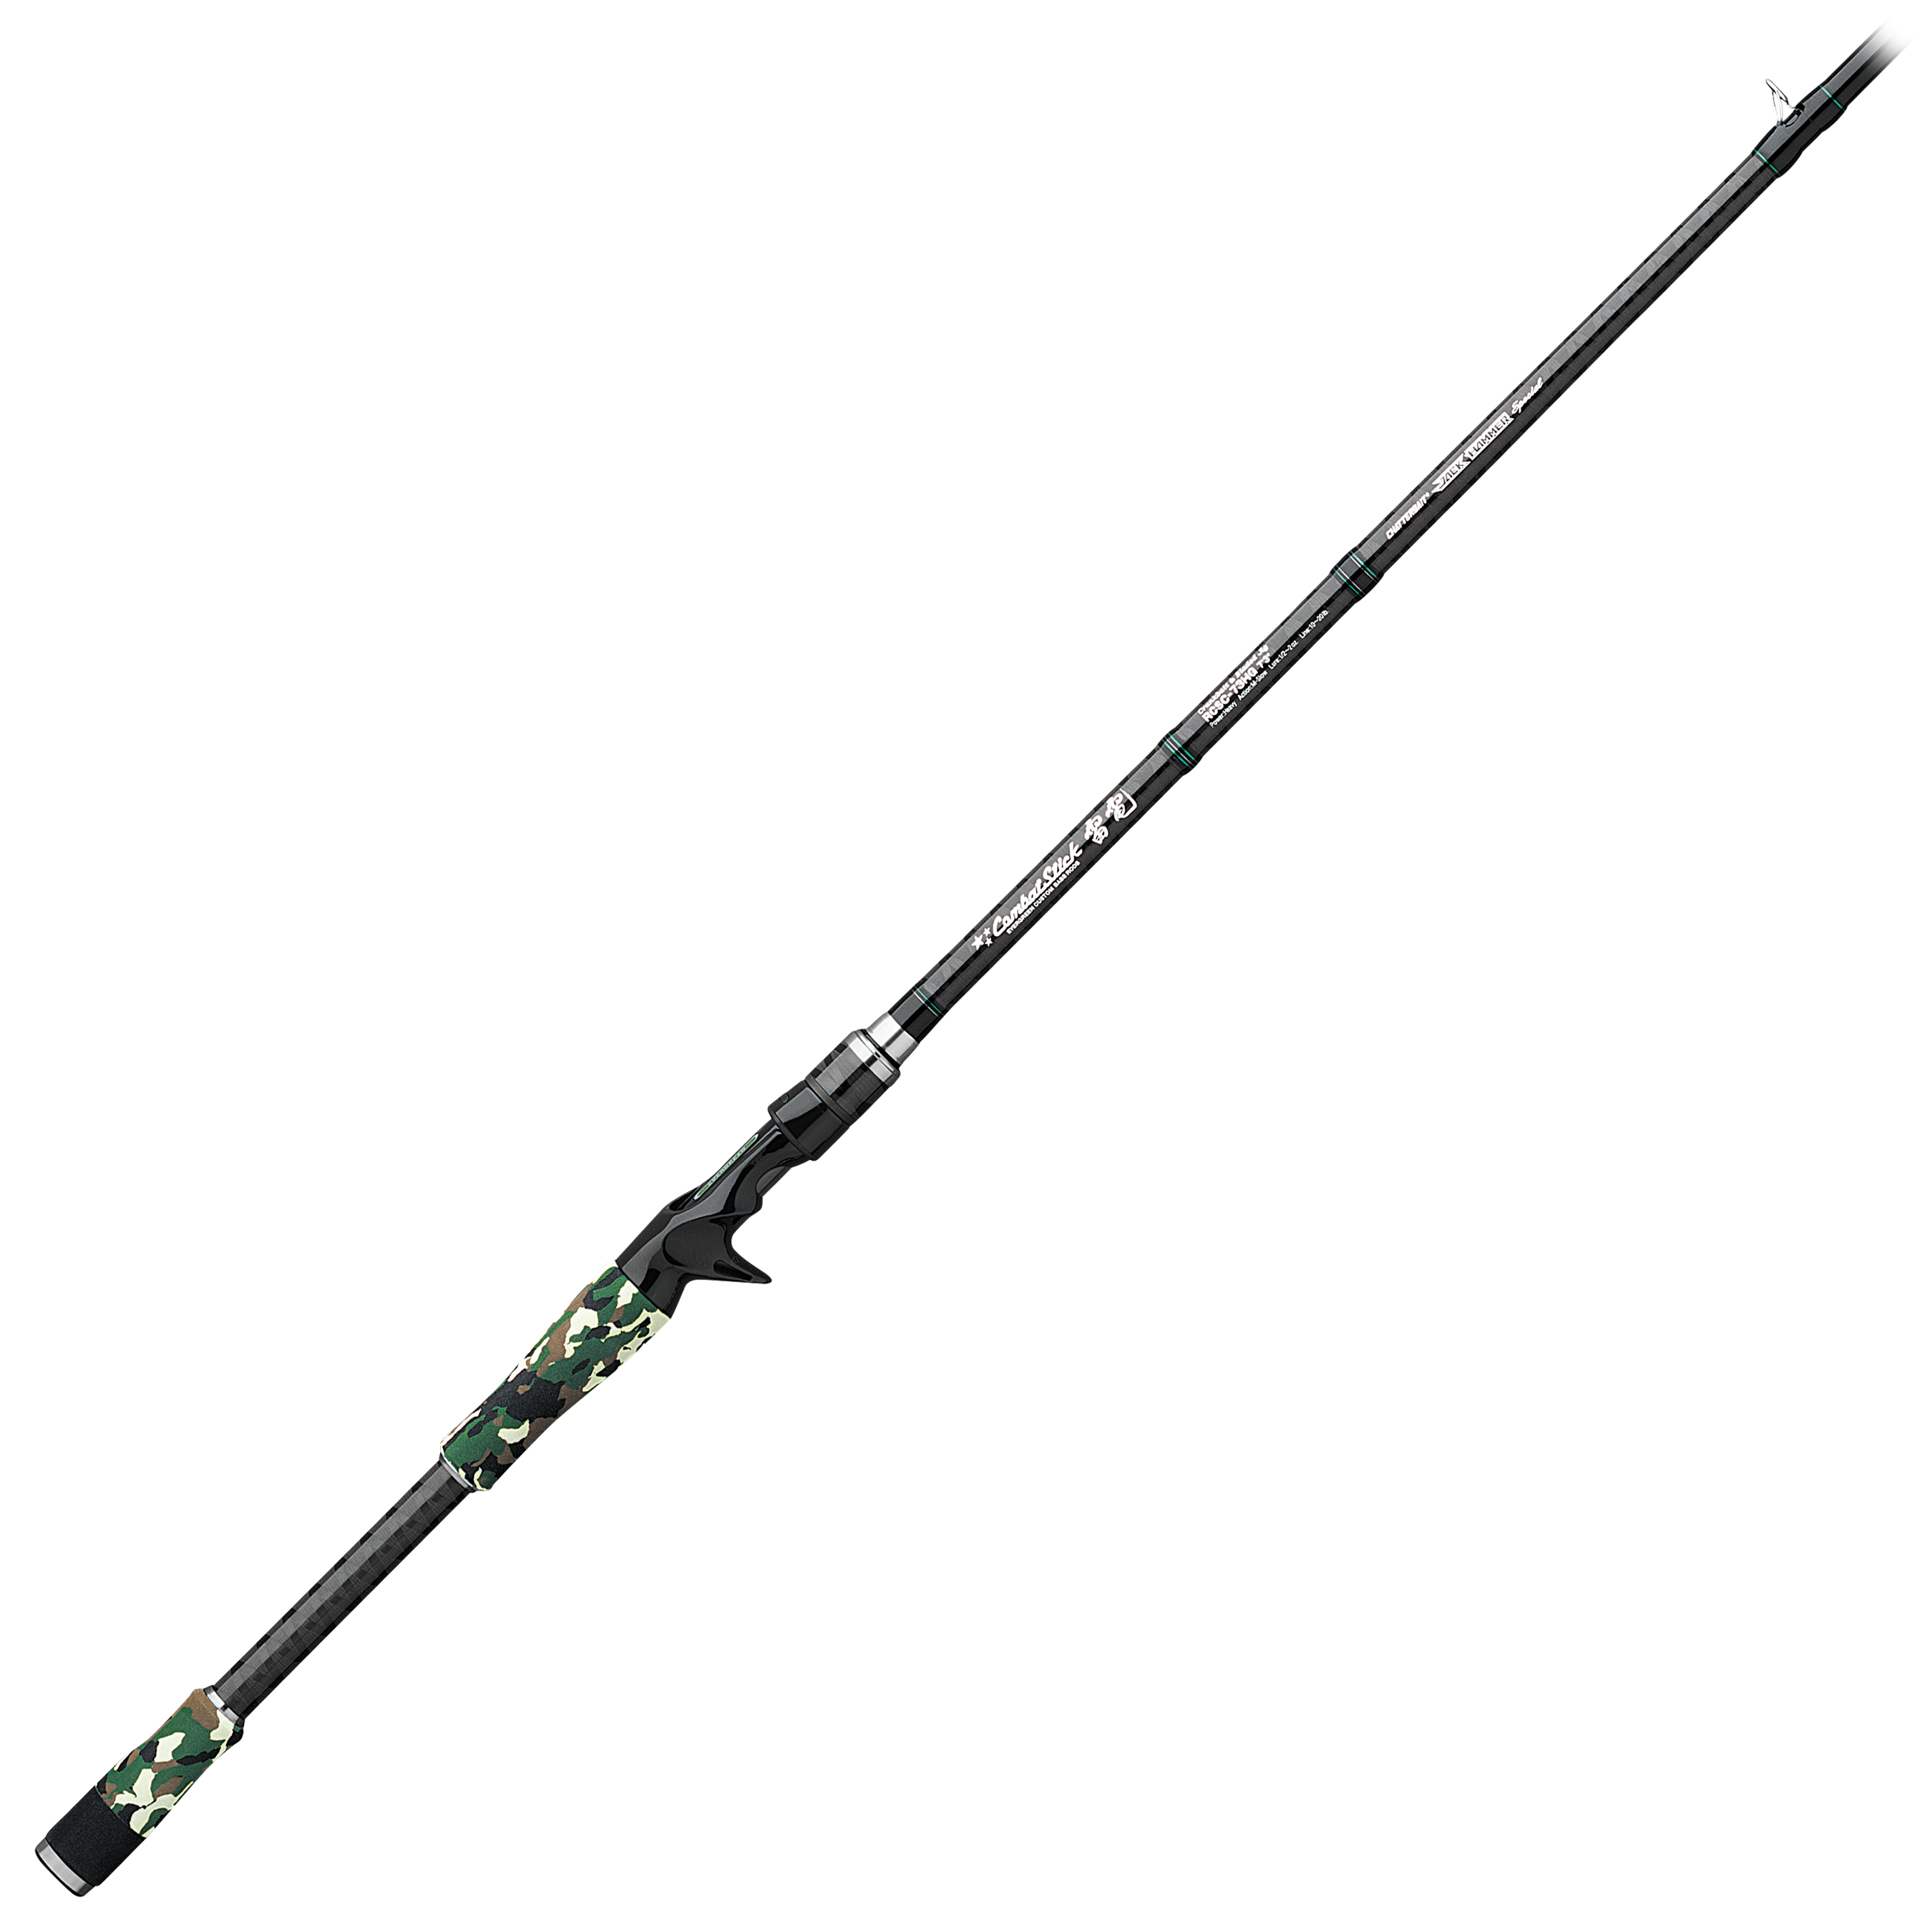 Limited Evergreen Brett Hite Super Combat Stick Casting Rod is the